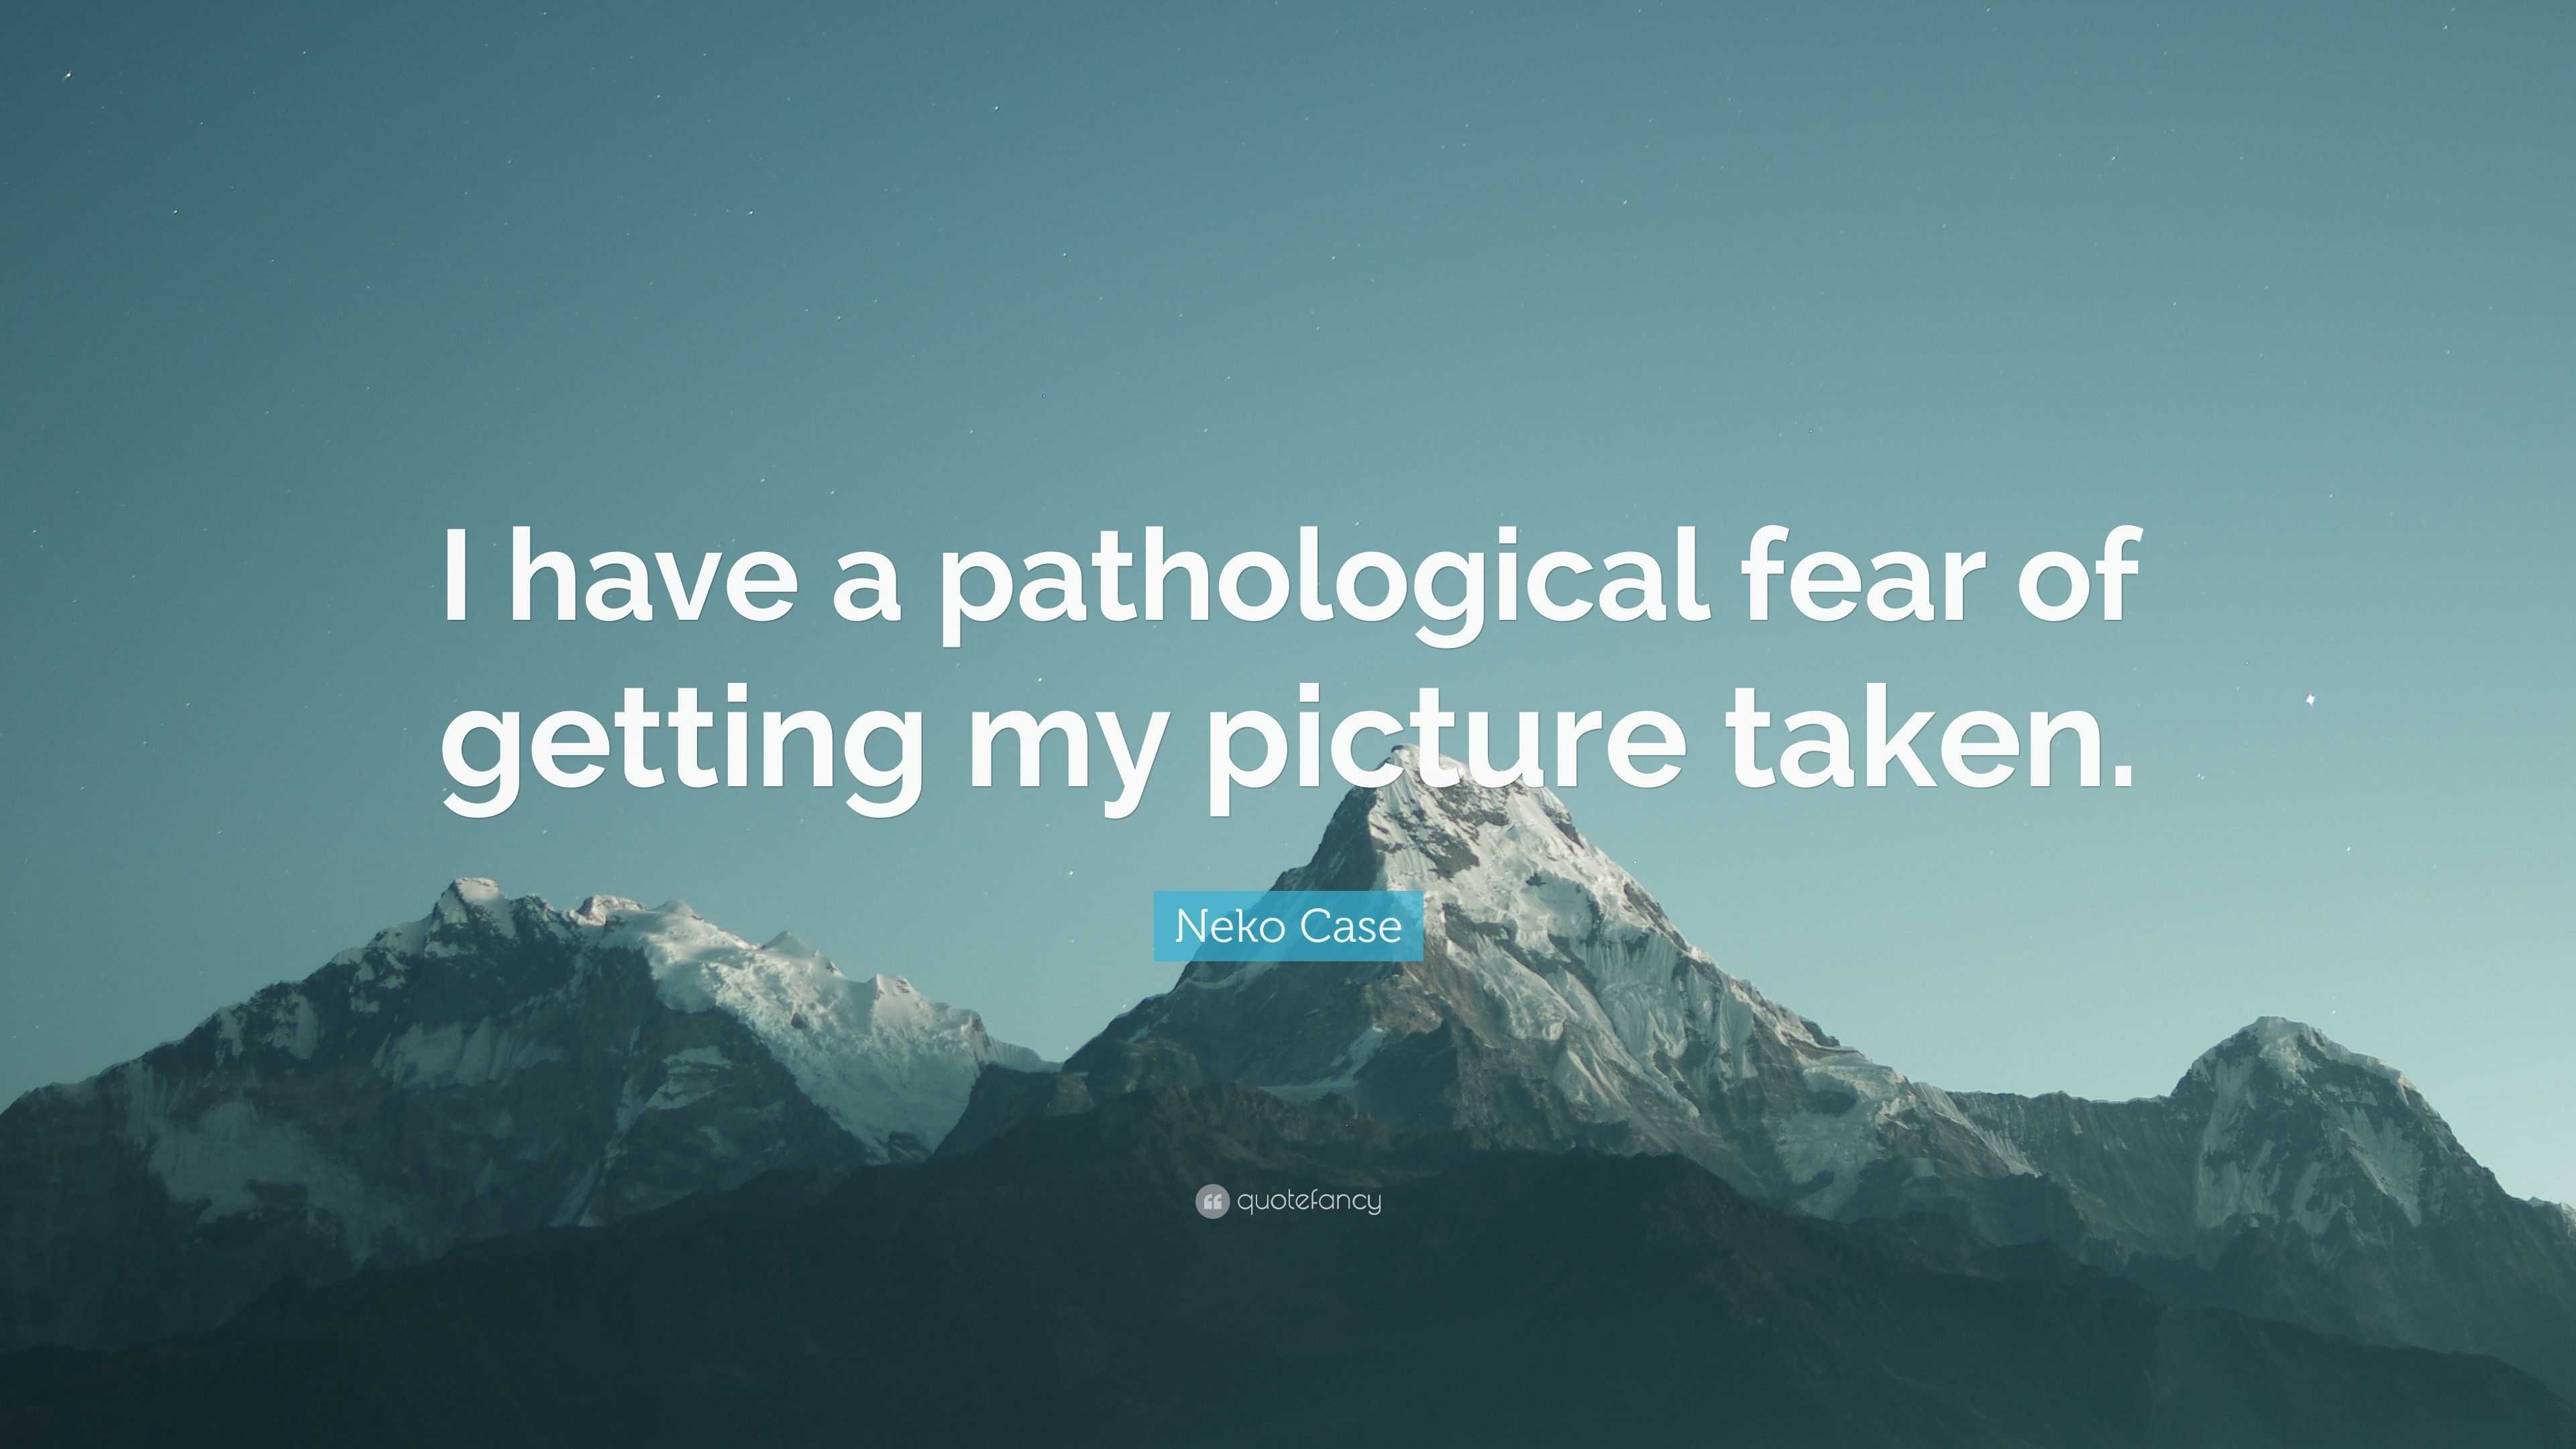 explain pathological fear